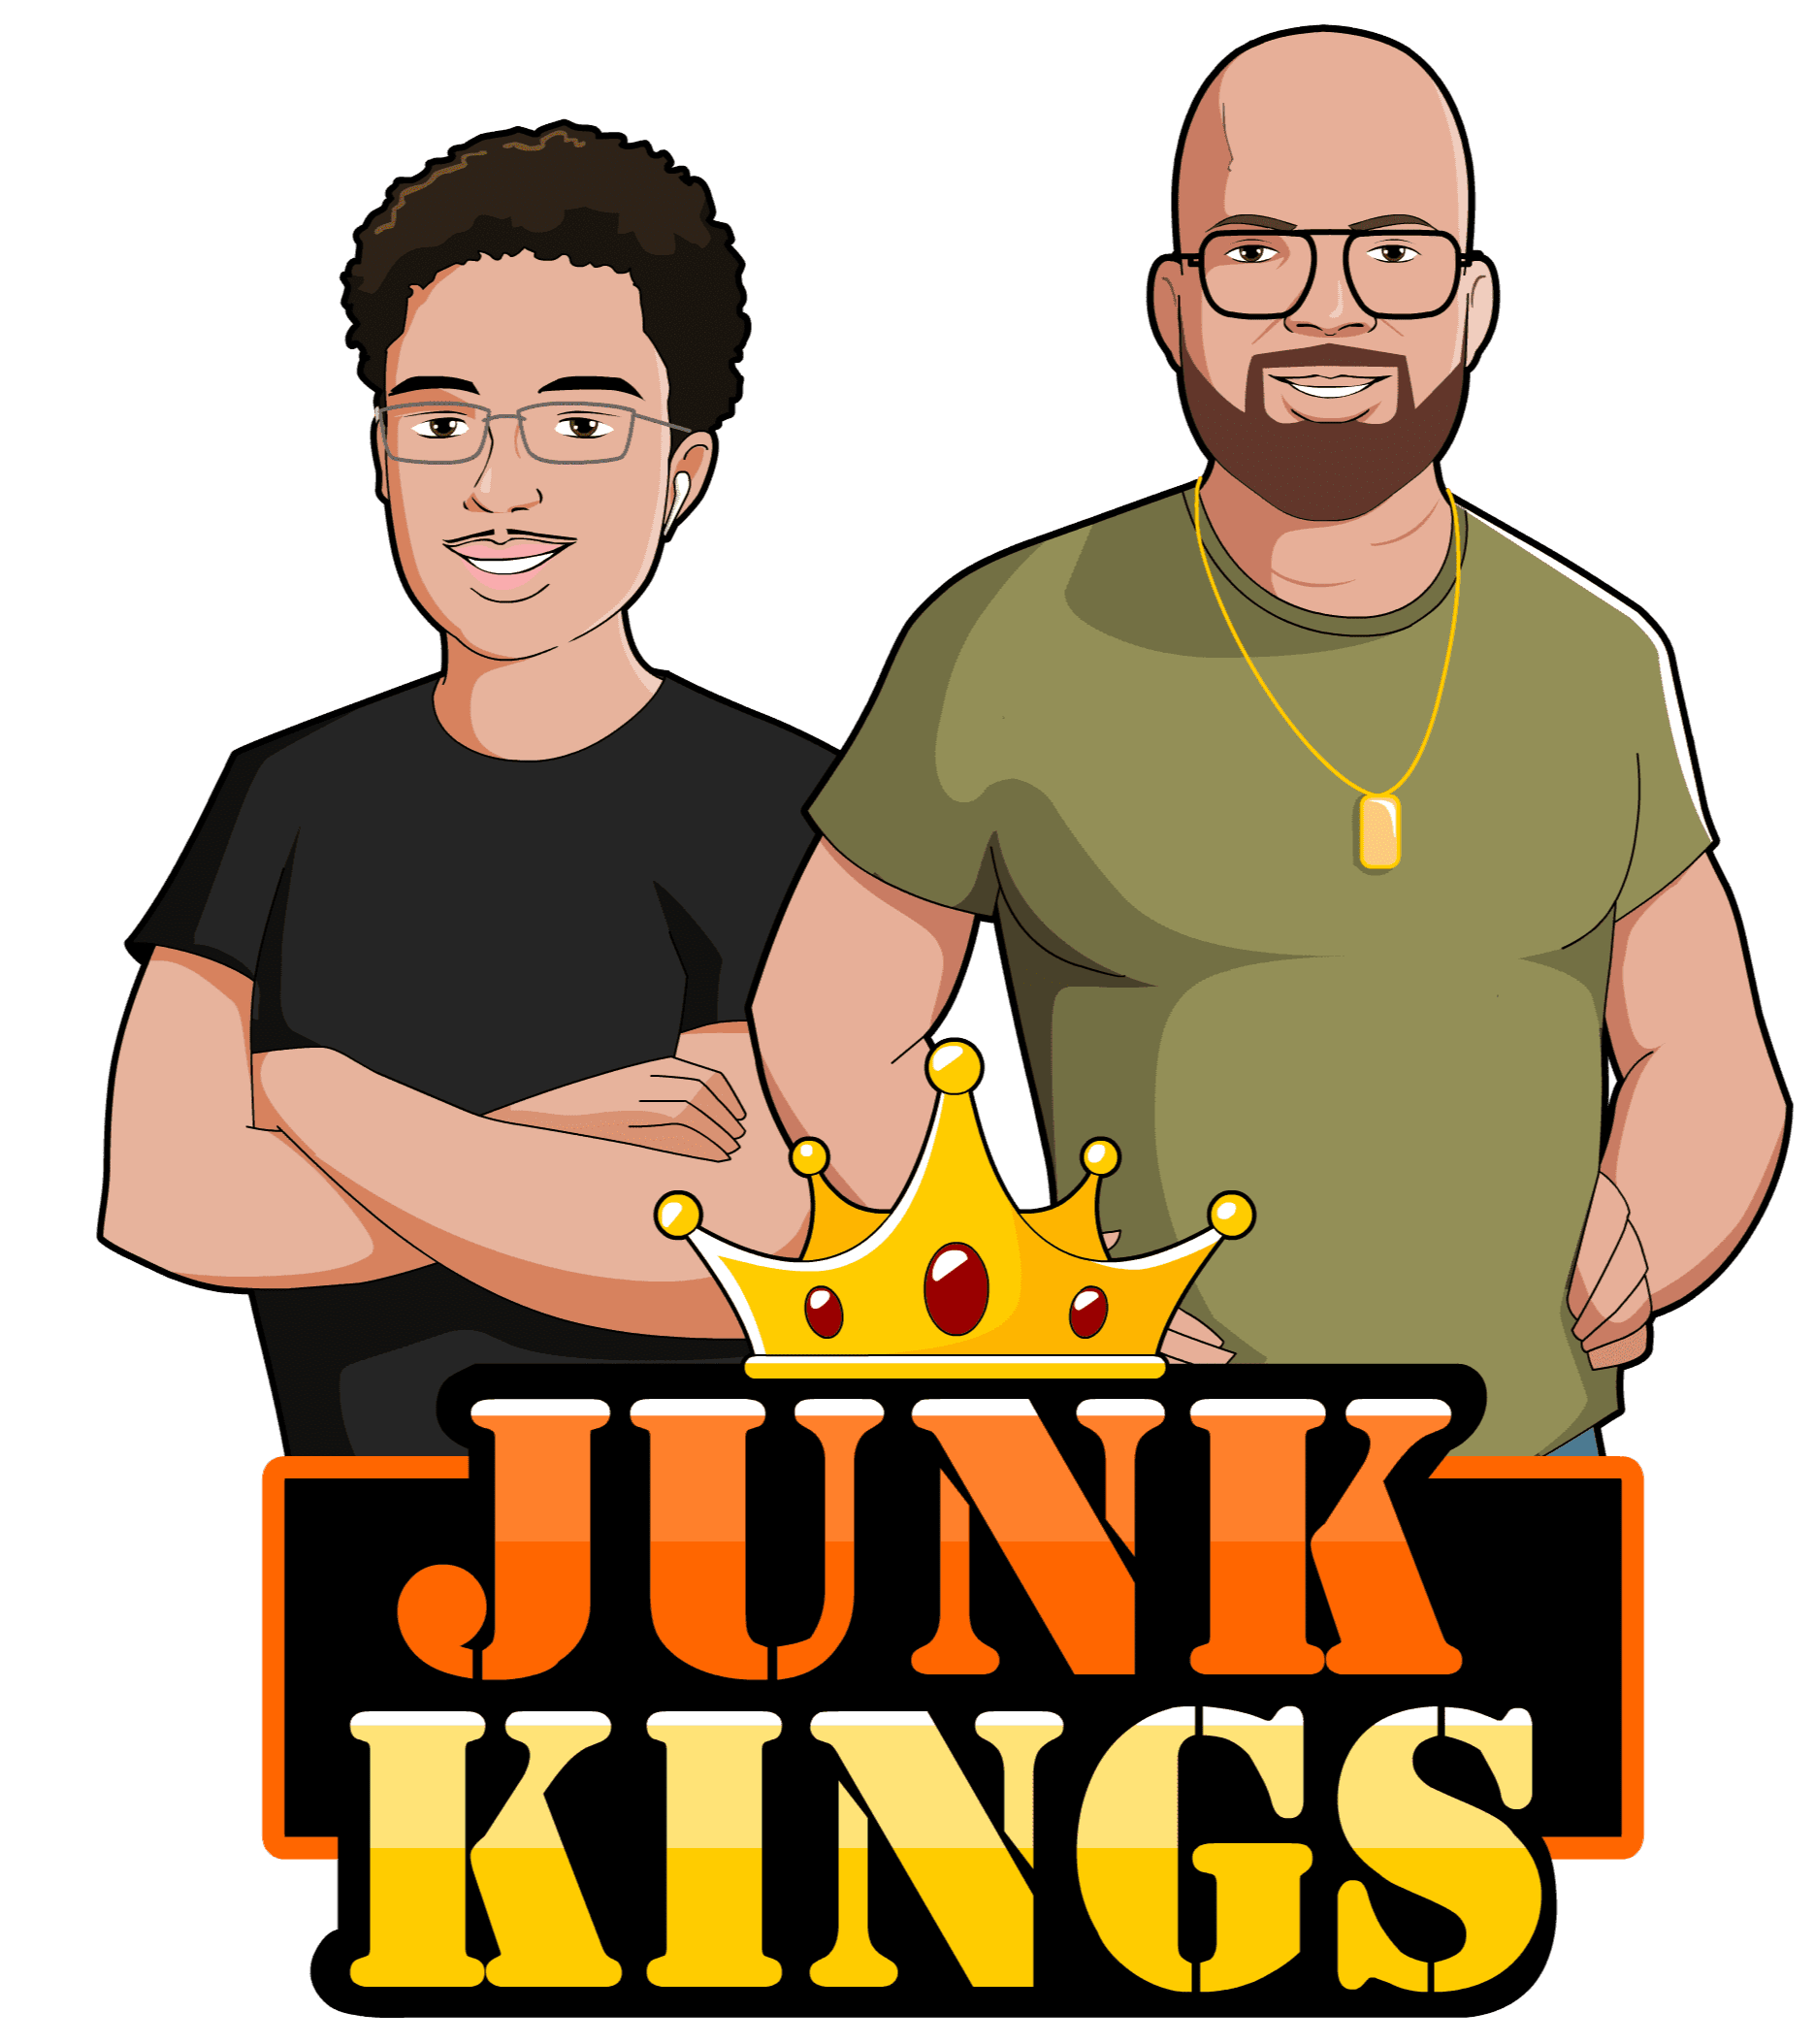 Junk Kings USA LLC